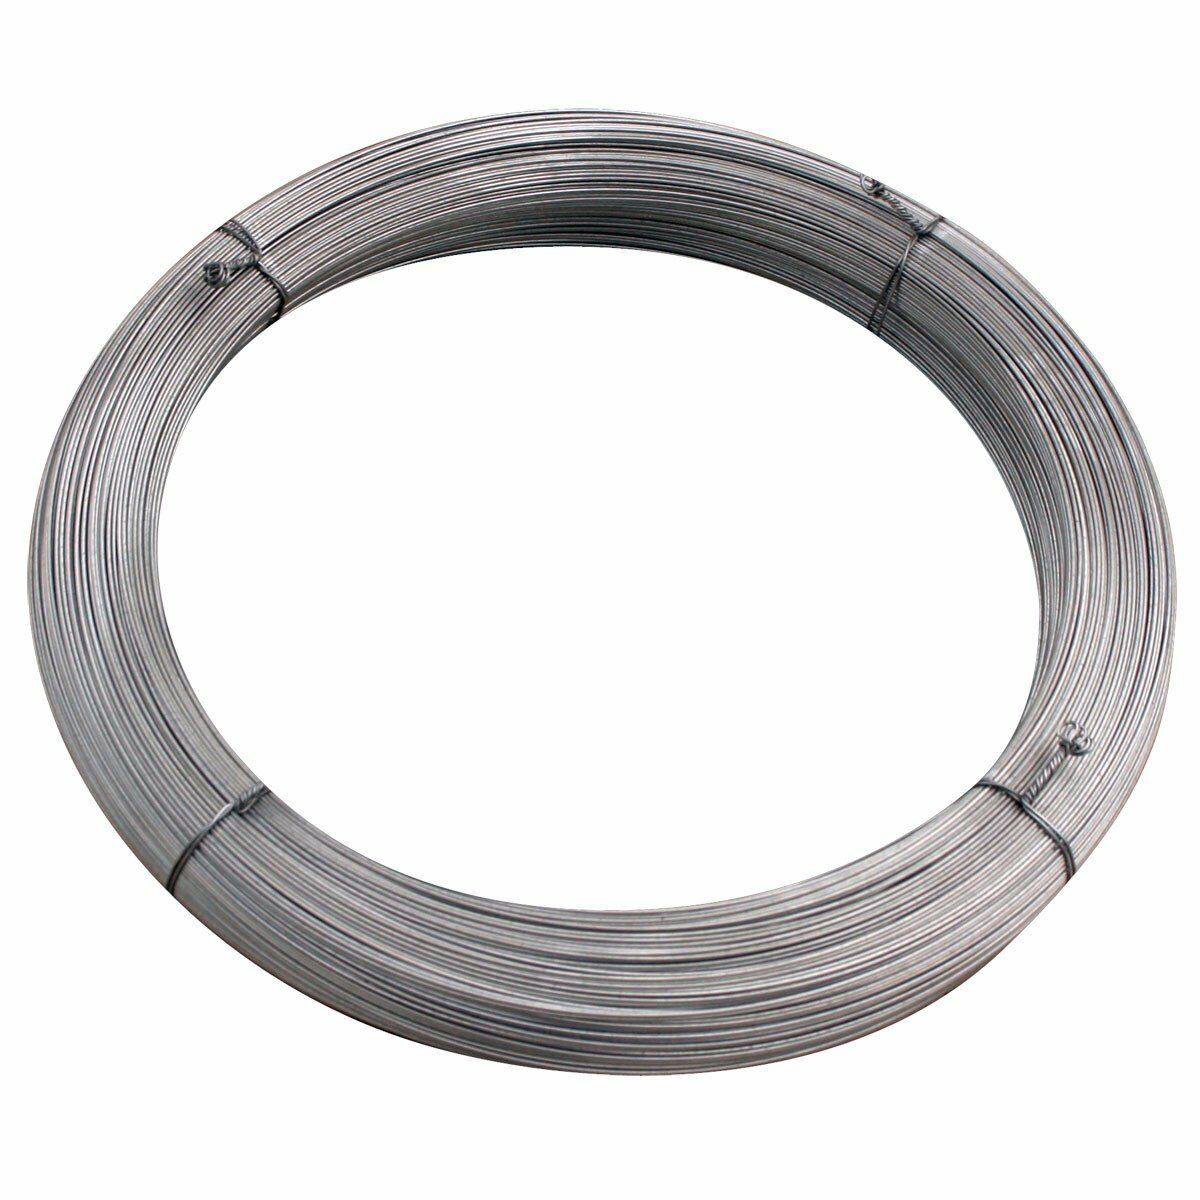 12-1 2 ga High-Tensile Wire 4000 Coil